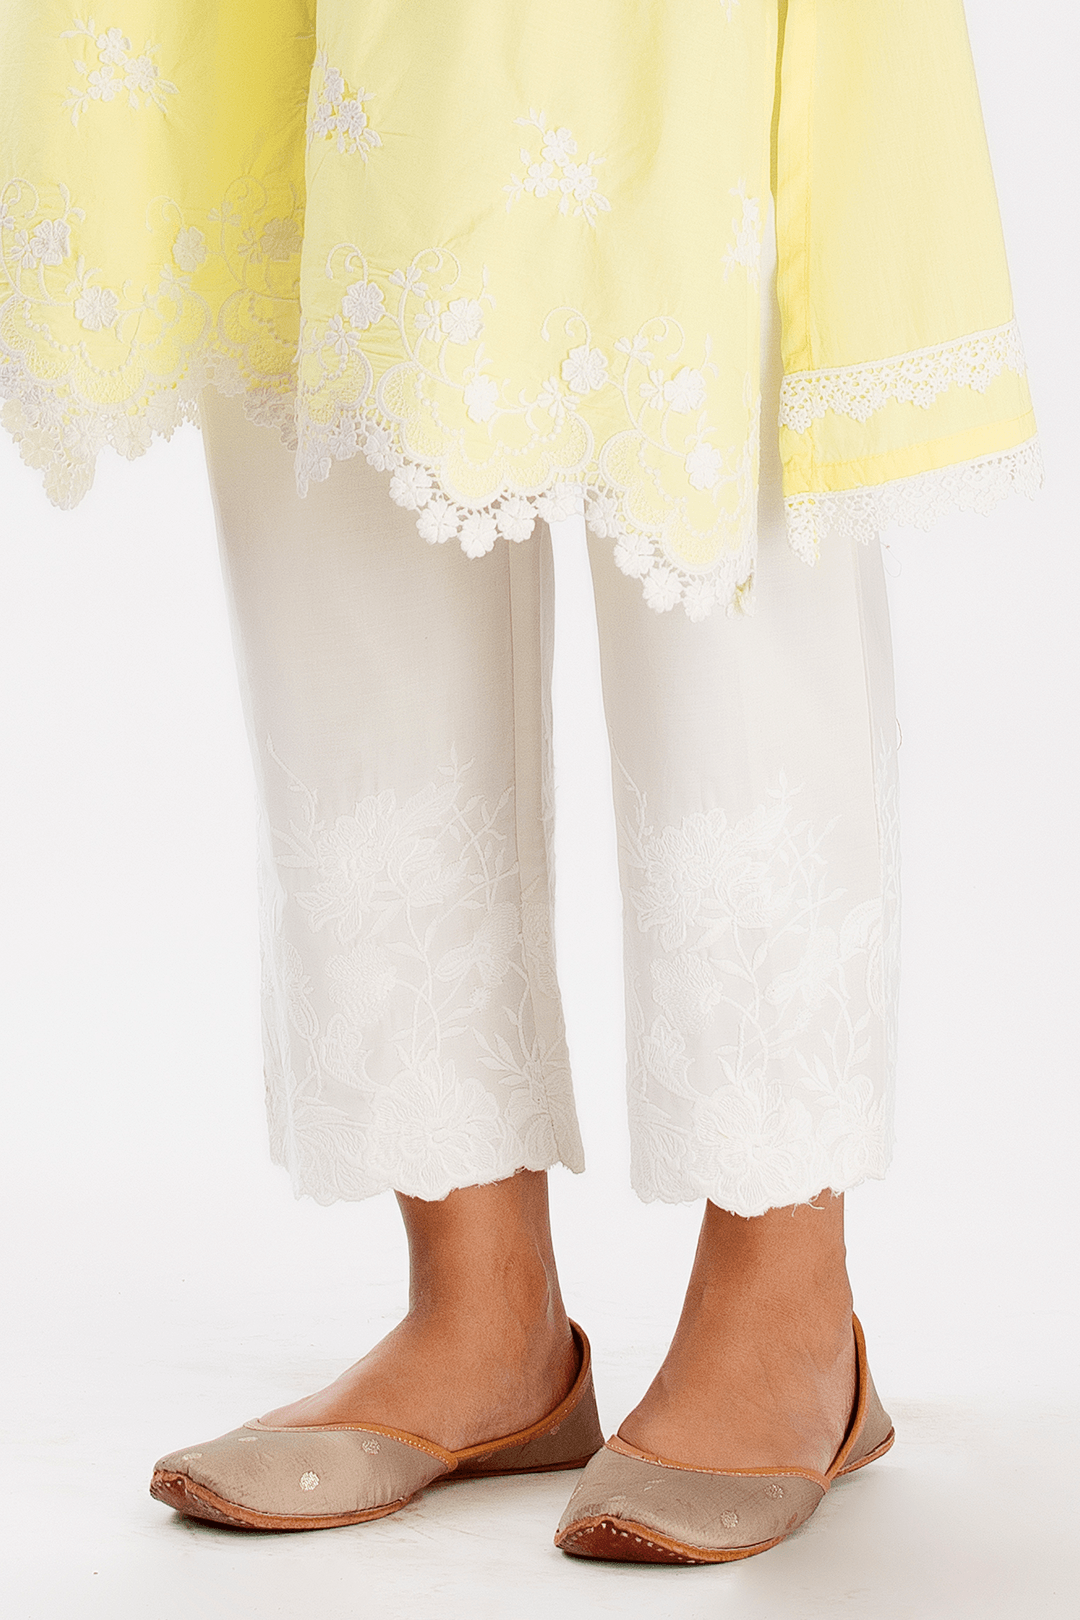 Mulmul Cotton Stella Yellow Kurta With Floral Embroidery White Pant